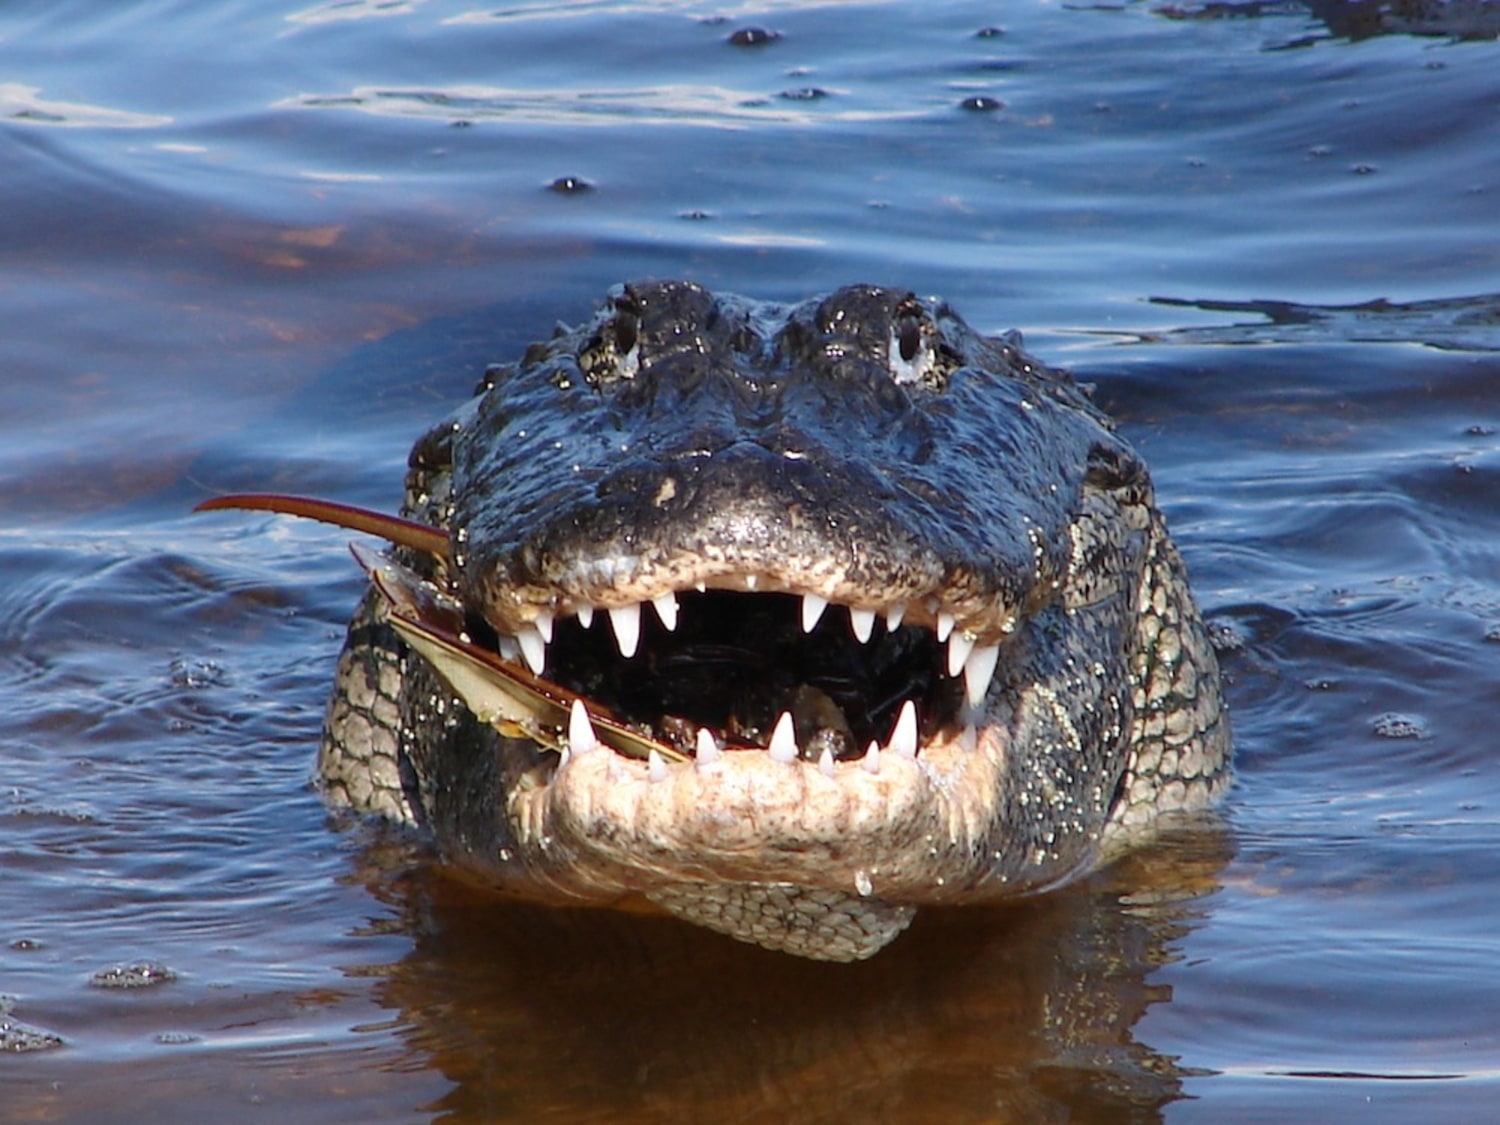 Crocodile vs Alligator Leather Difference